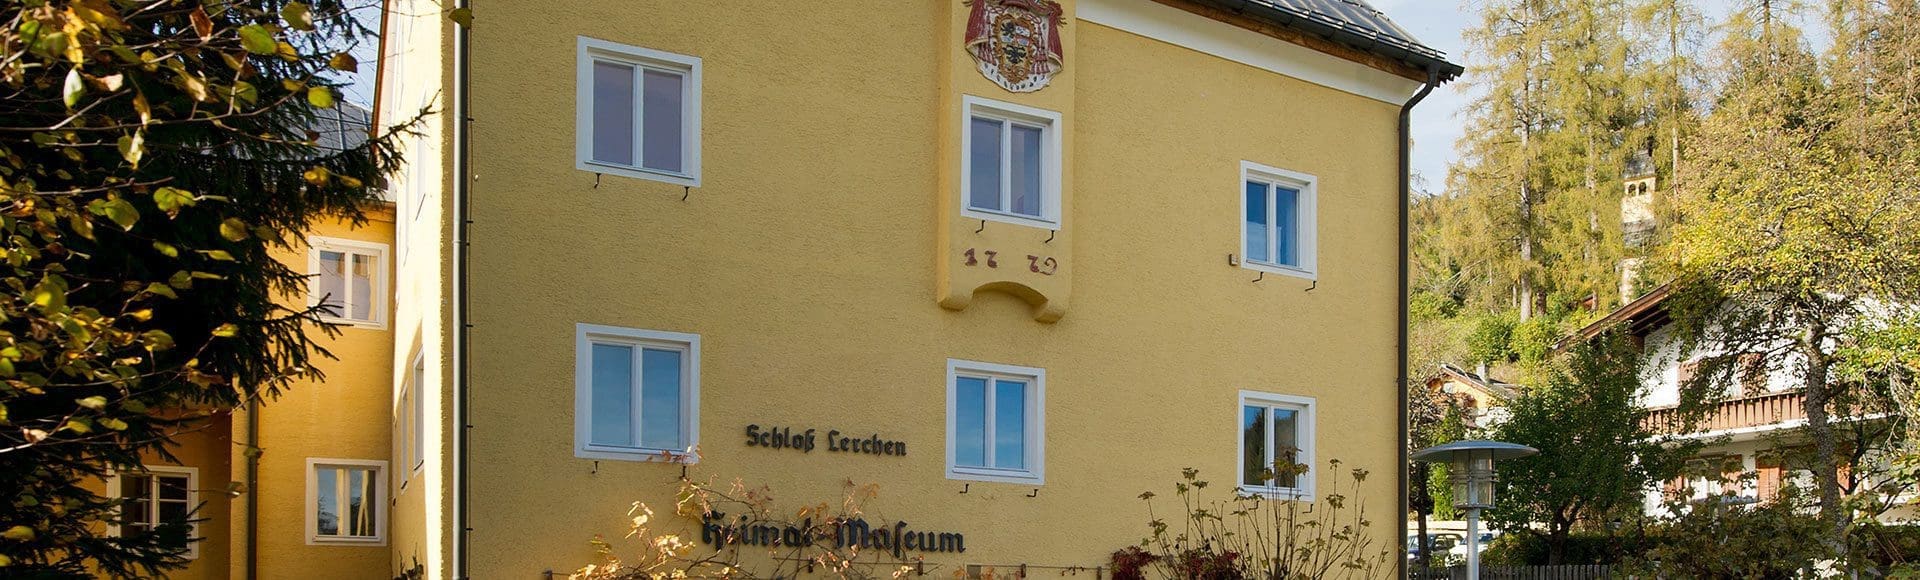 Museum Schloss Lerchen Radstaedter Museumsverein 1